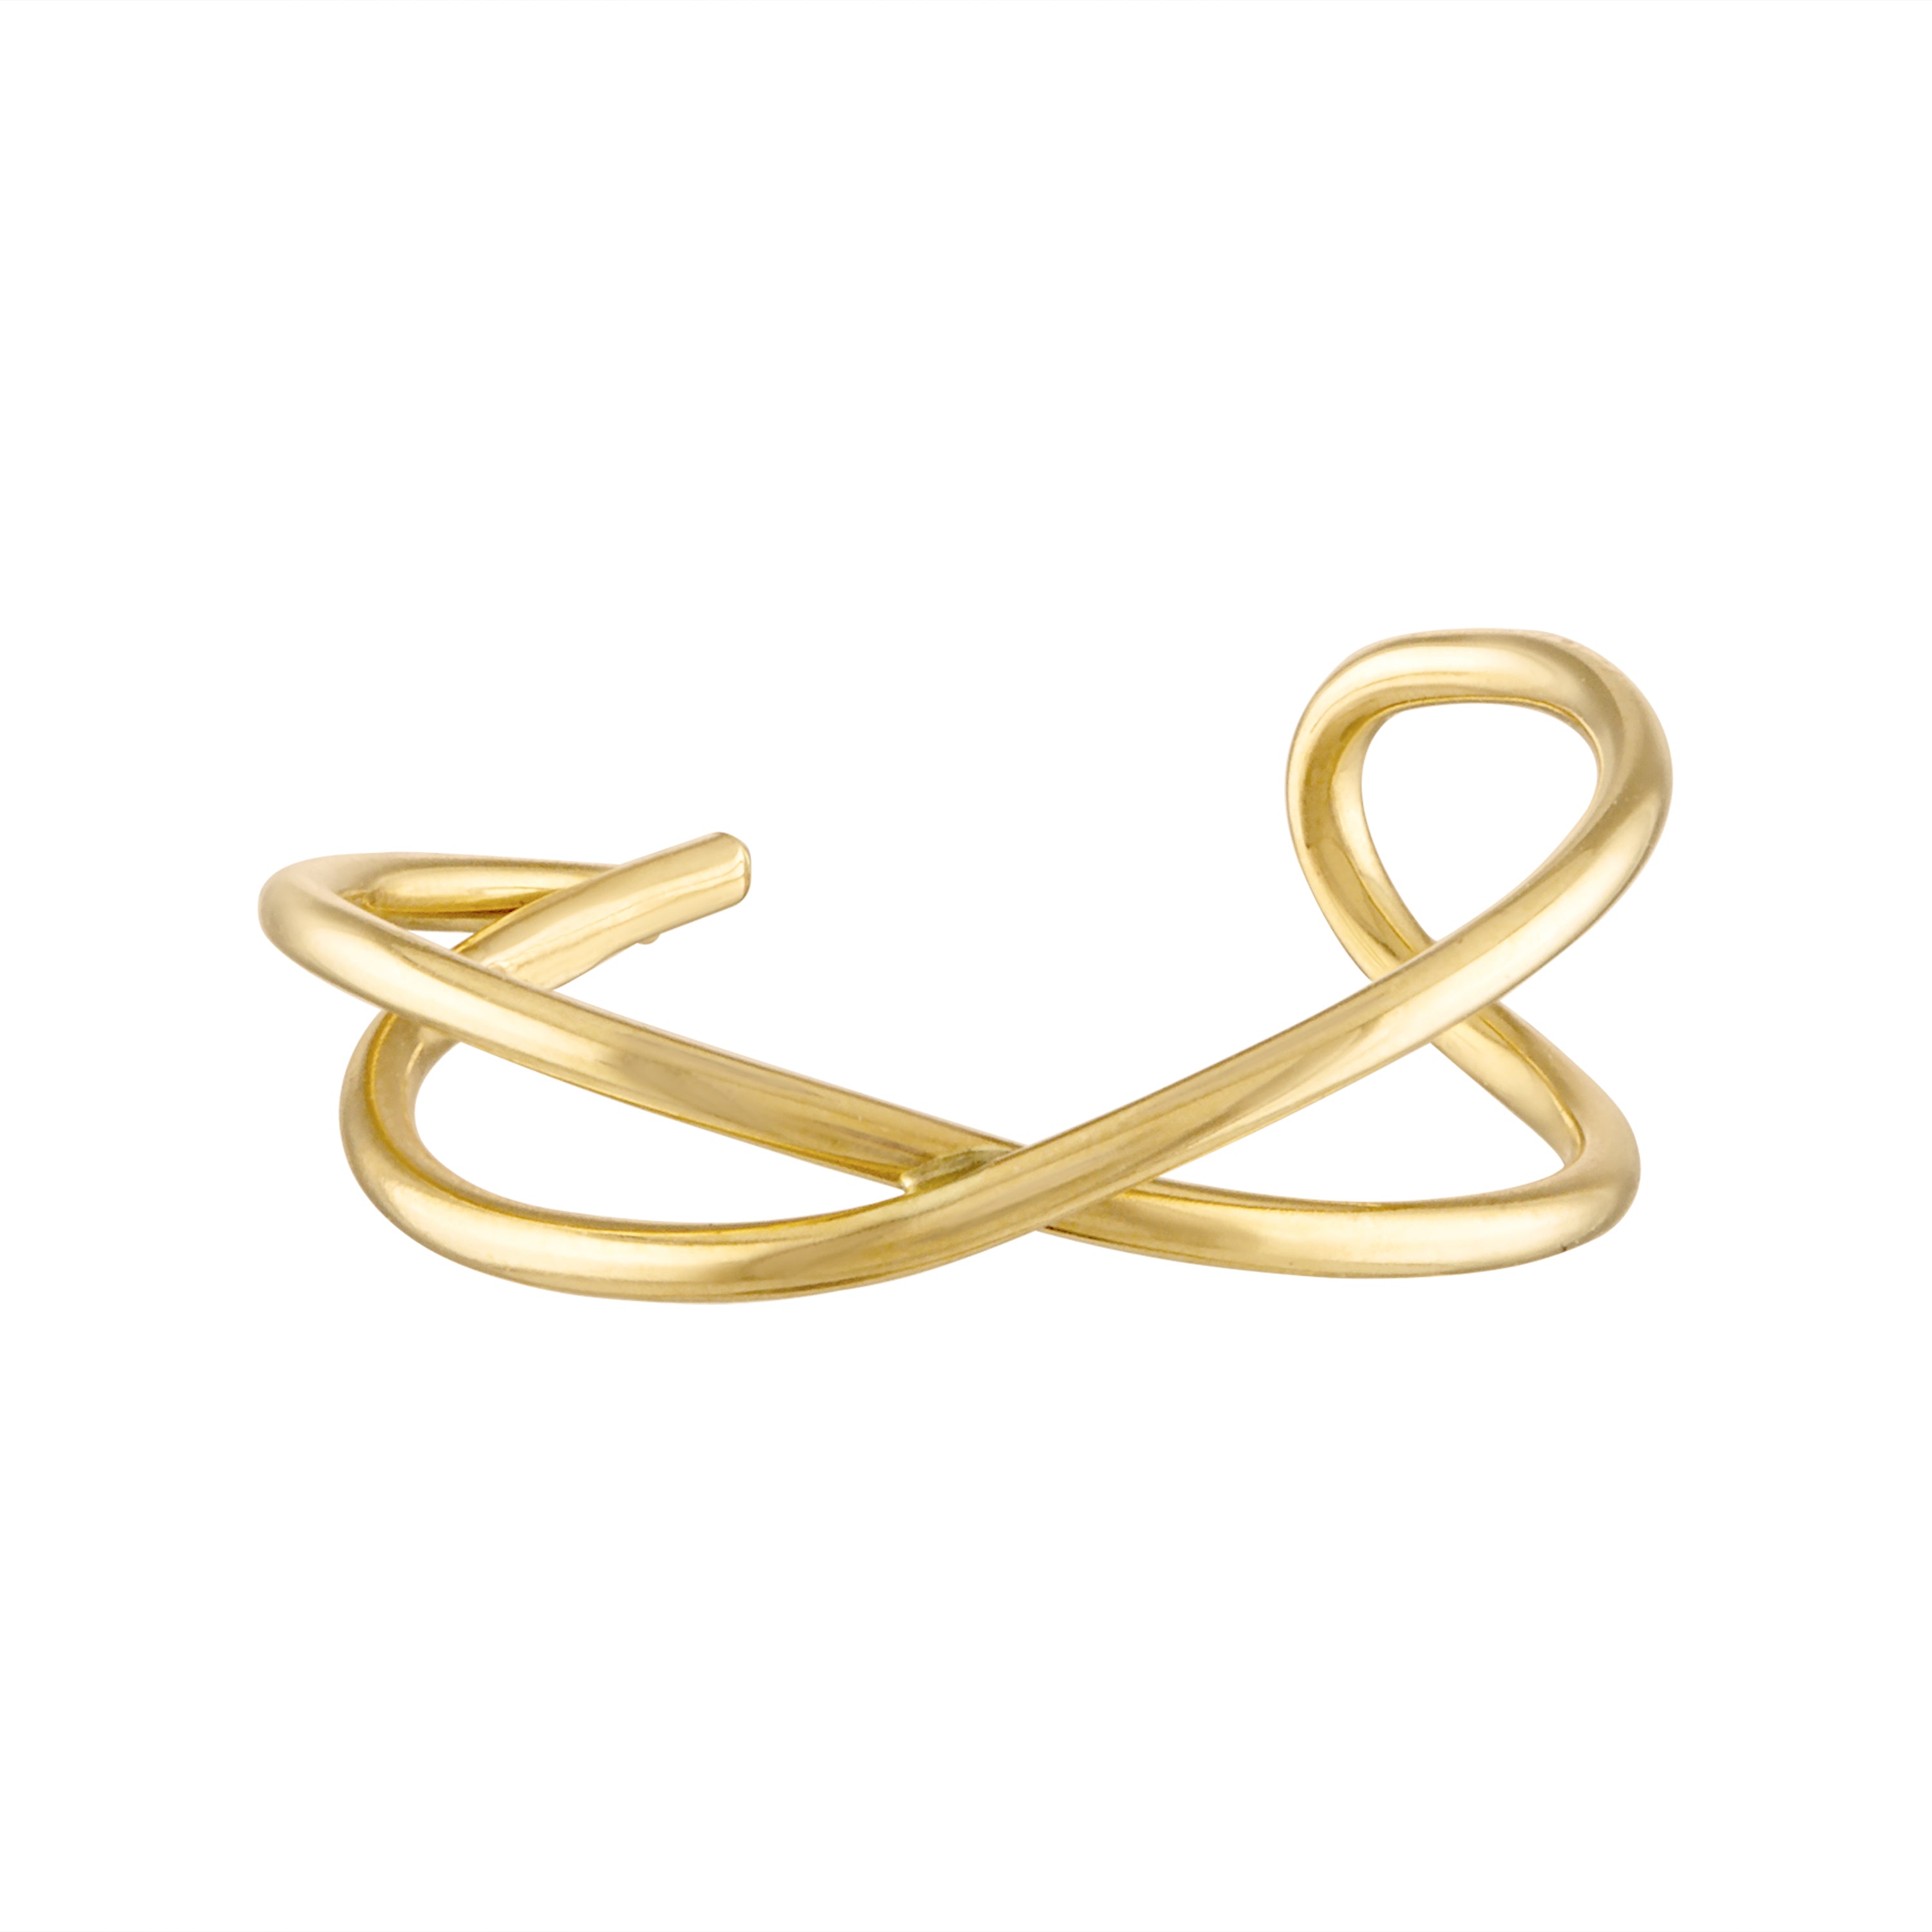 Adjustable Open Toe Ring in 10K Gold | Zales